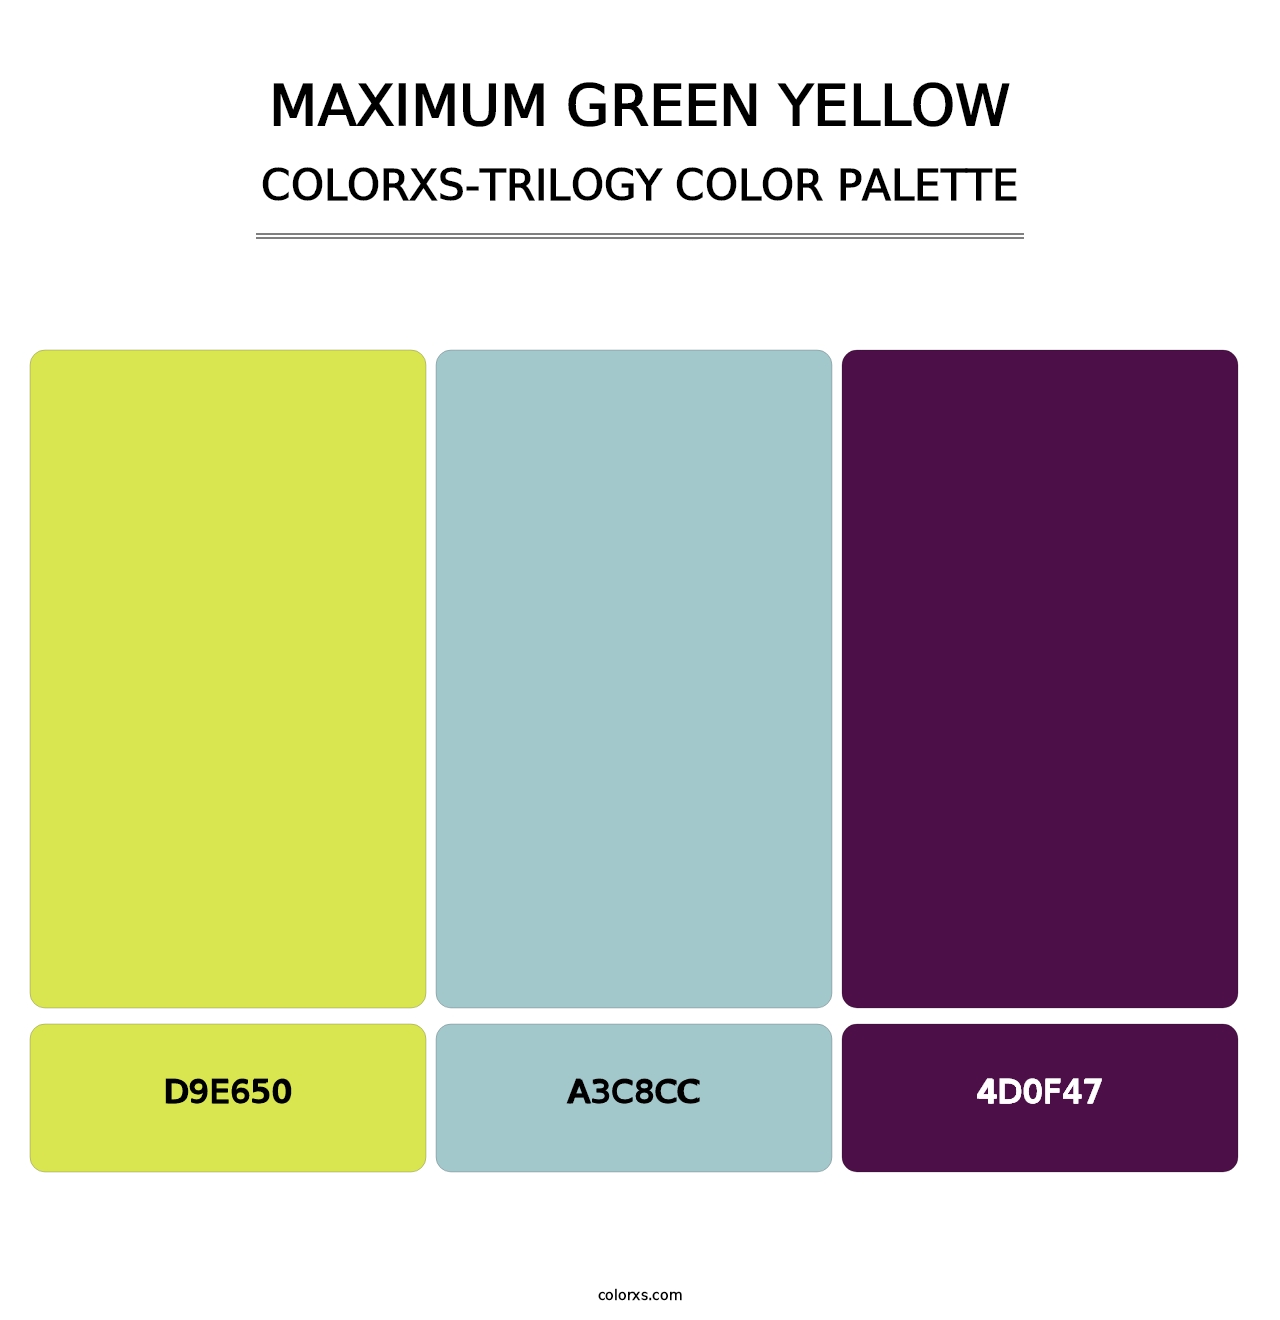 Maximum Green Yellow - Colorxs Trilogy Palette